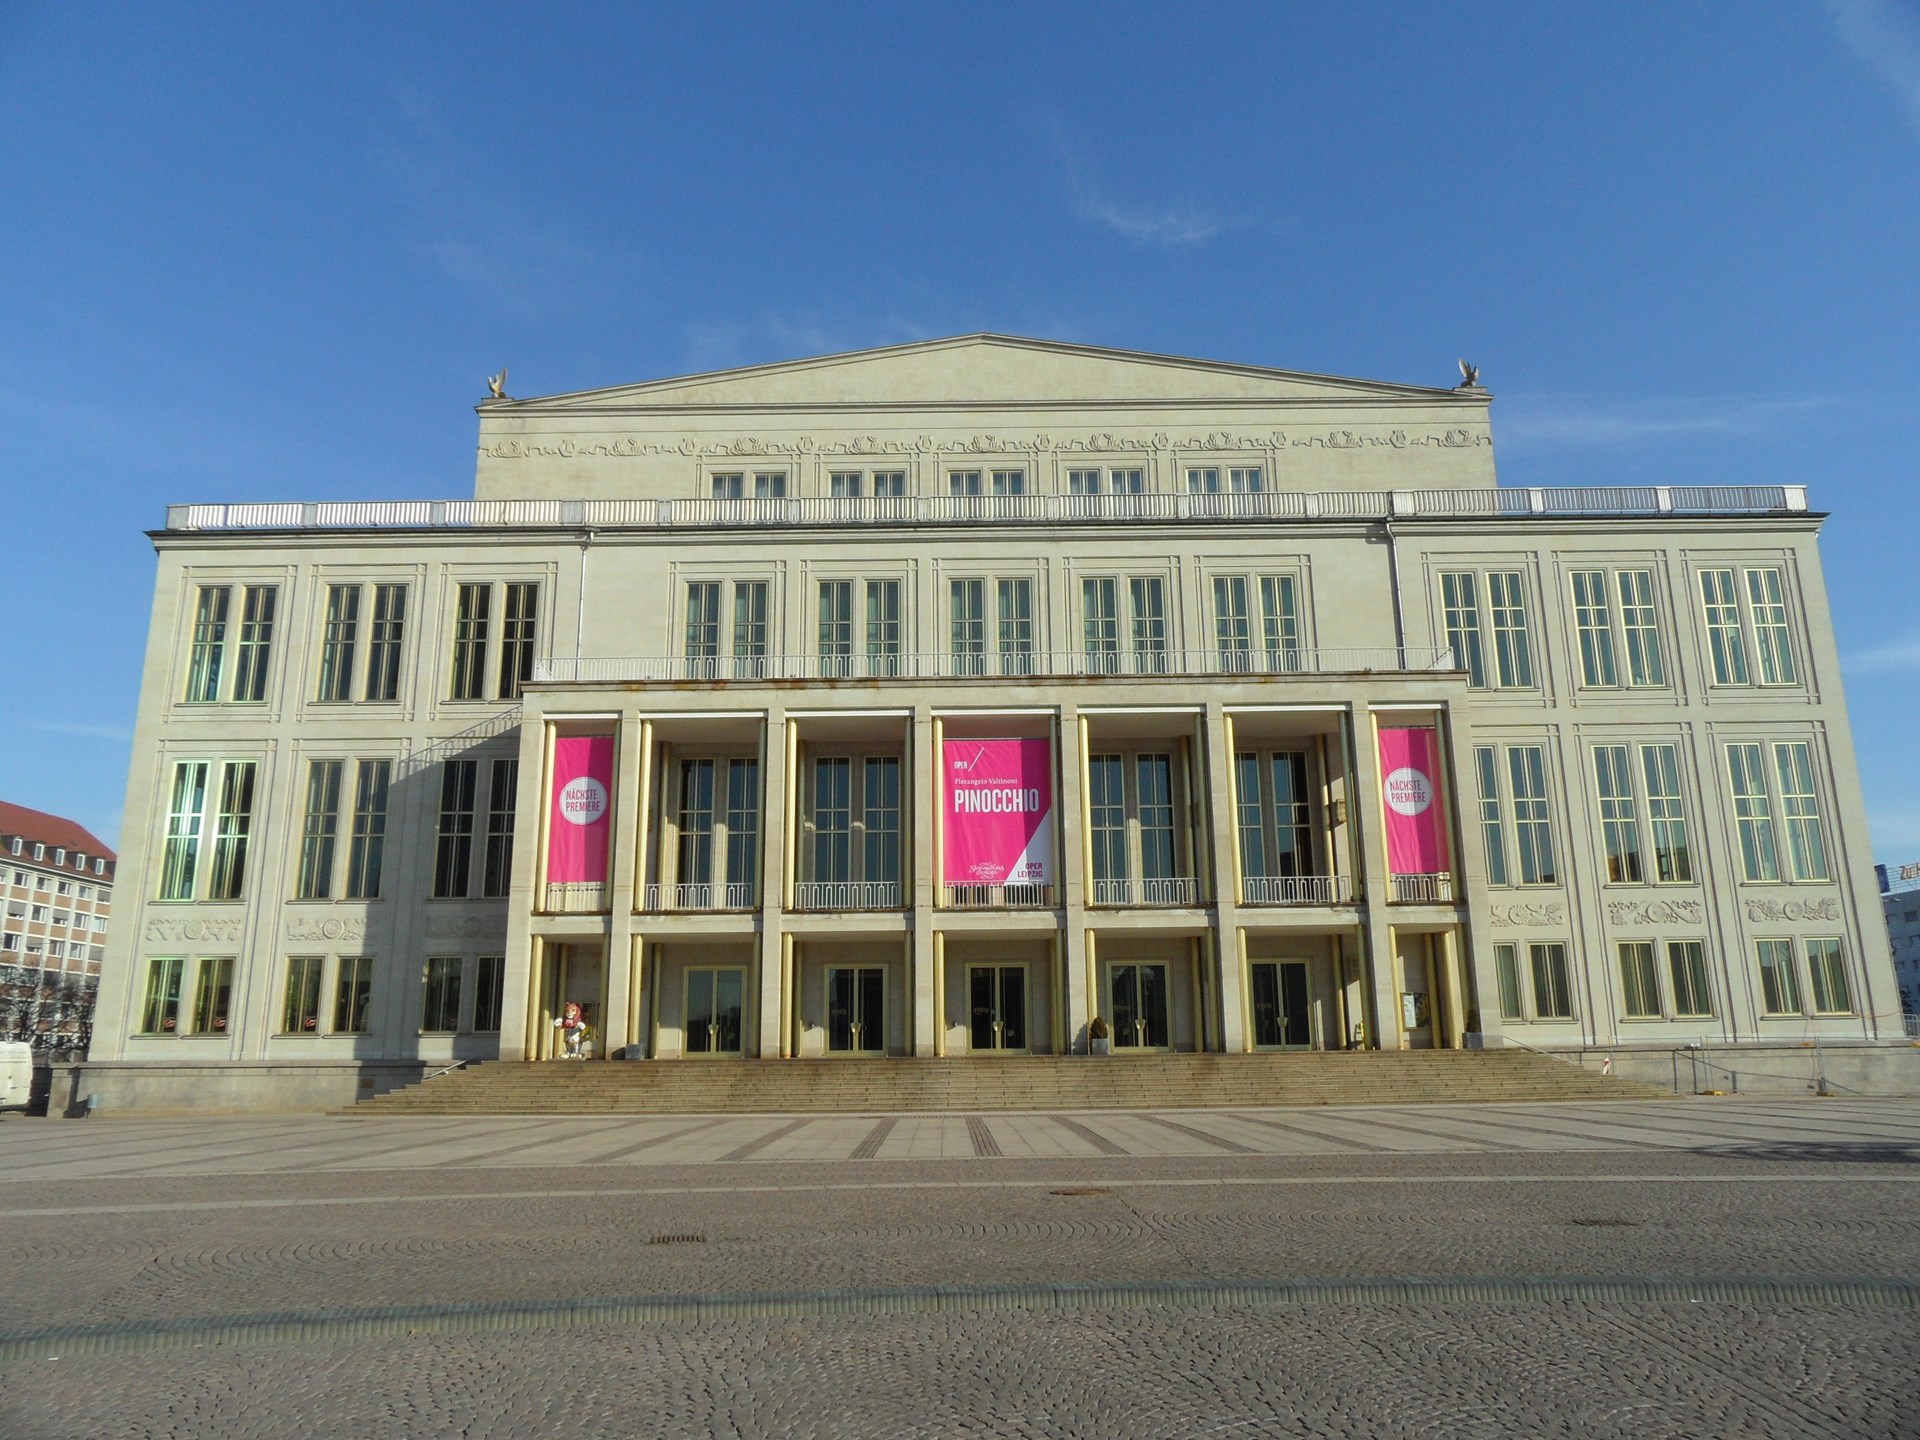 Oper Leipzig